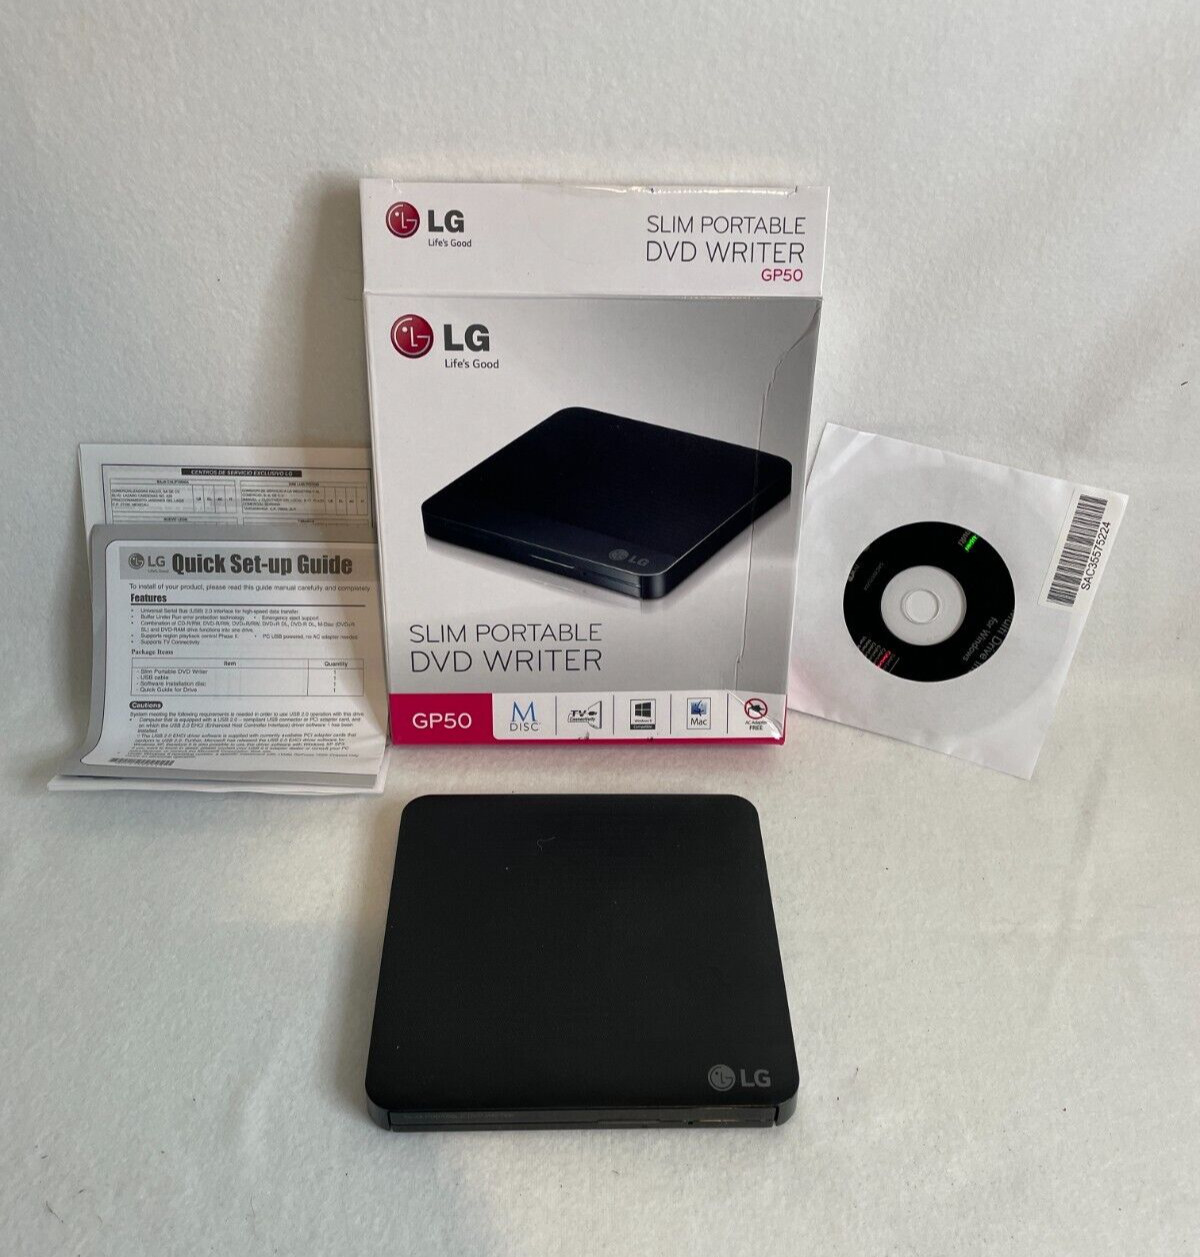 LG GP50 Slim Portable External DVD Writer Optical Drive USB Powered (Black)